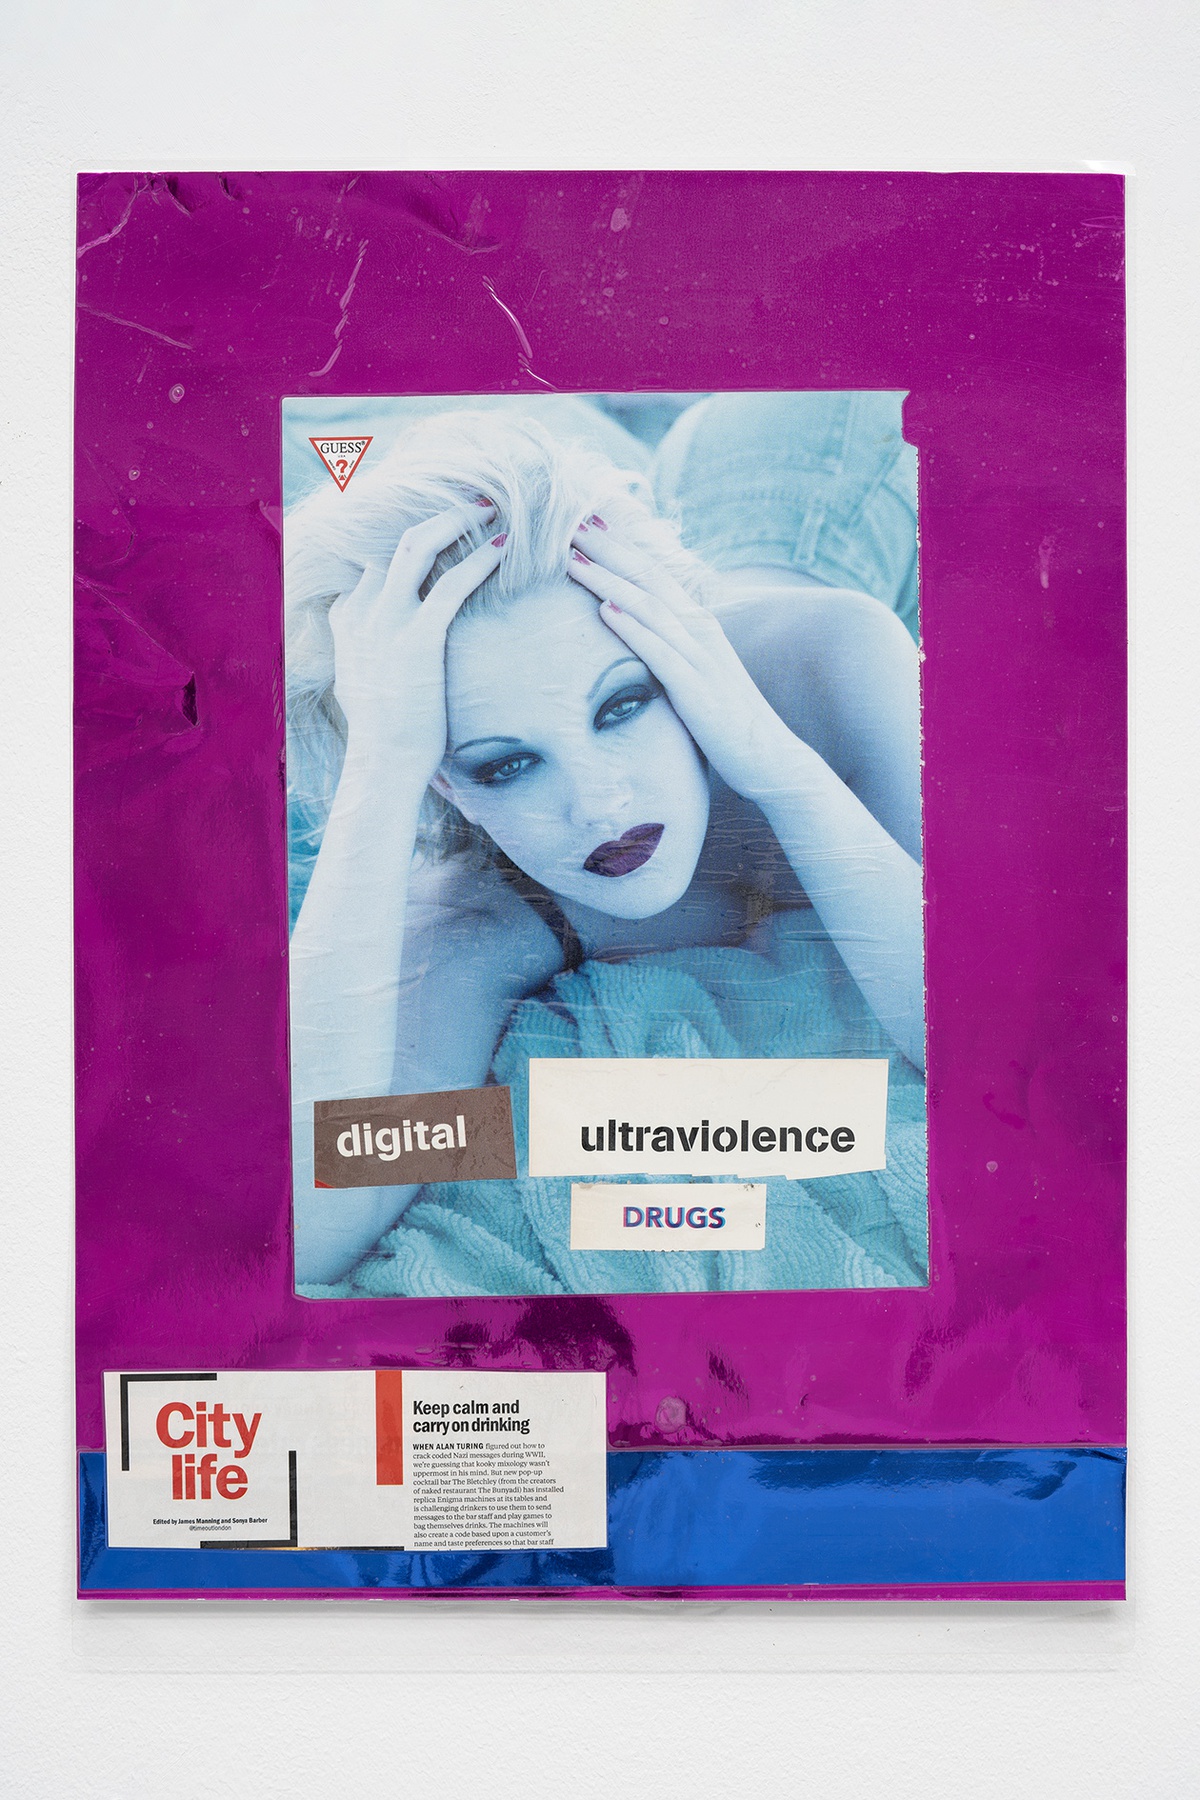 Richard SidesUntitled (Drew Barrymore digital ultraviolence DRUGS City life Keep calm...)’, 2018laminated mixed media, 60 x 42,5 cm